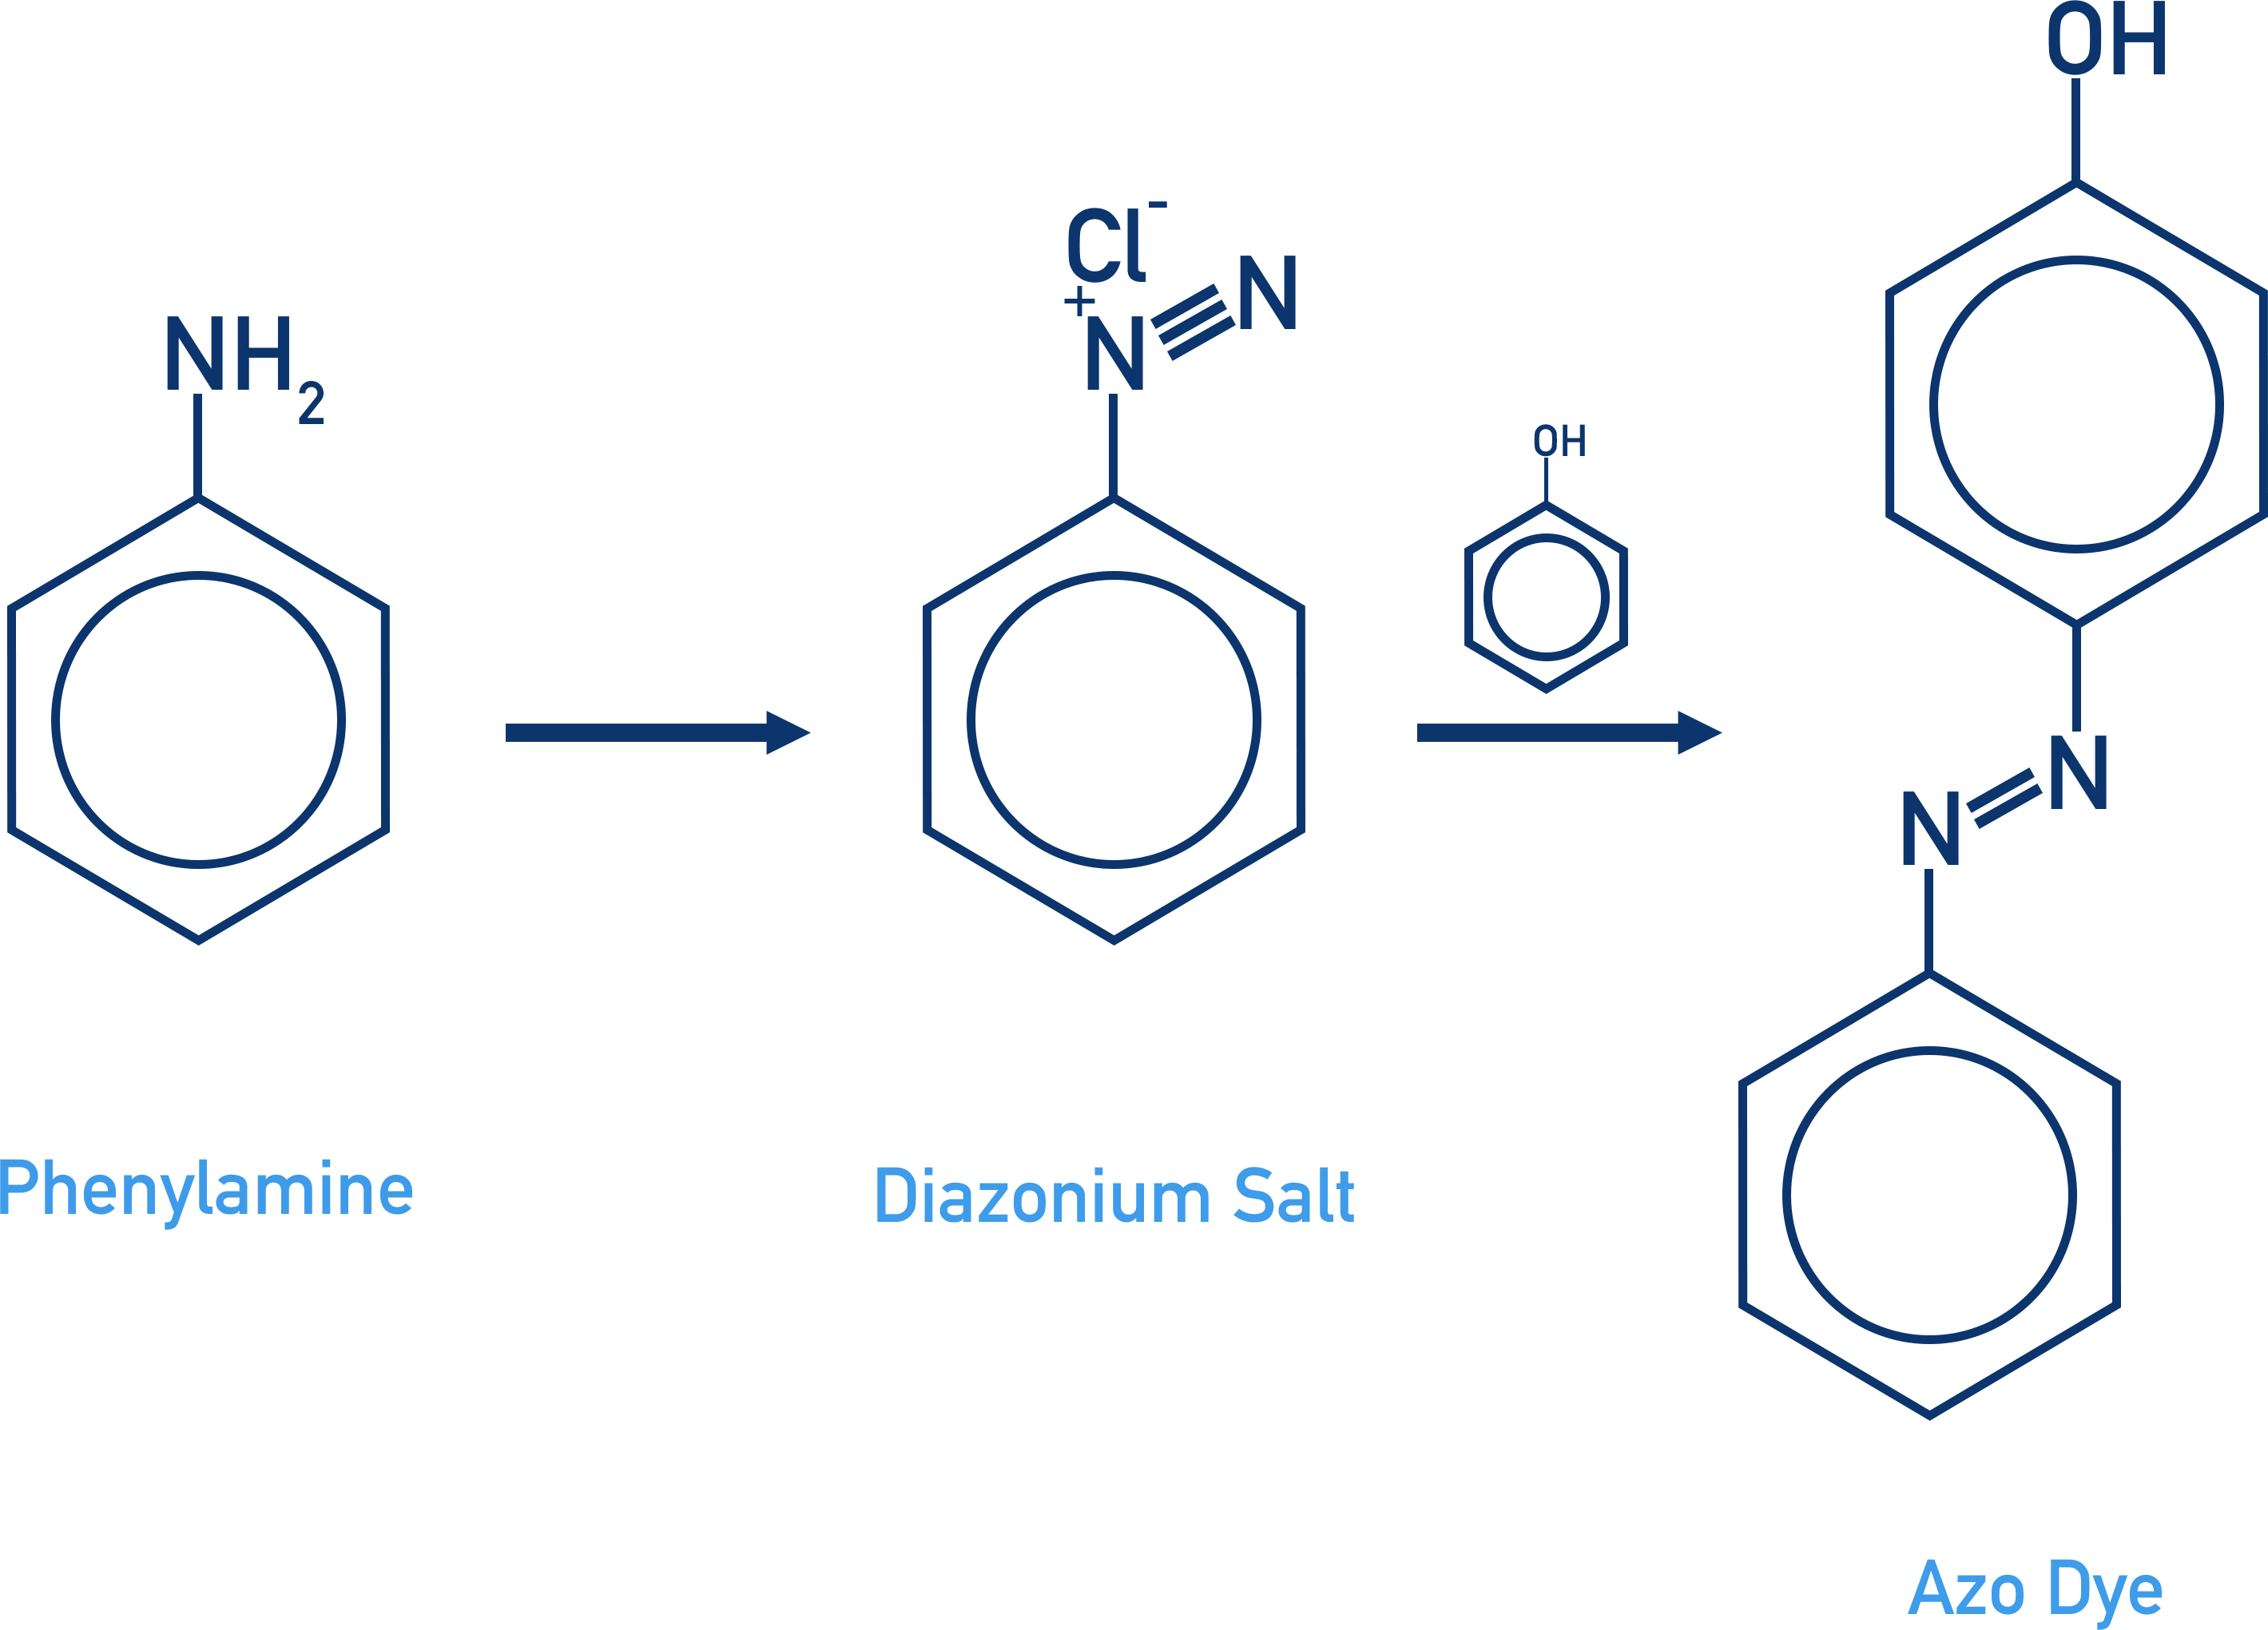 preparing azo dye phenylamine diazonium salt